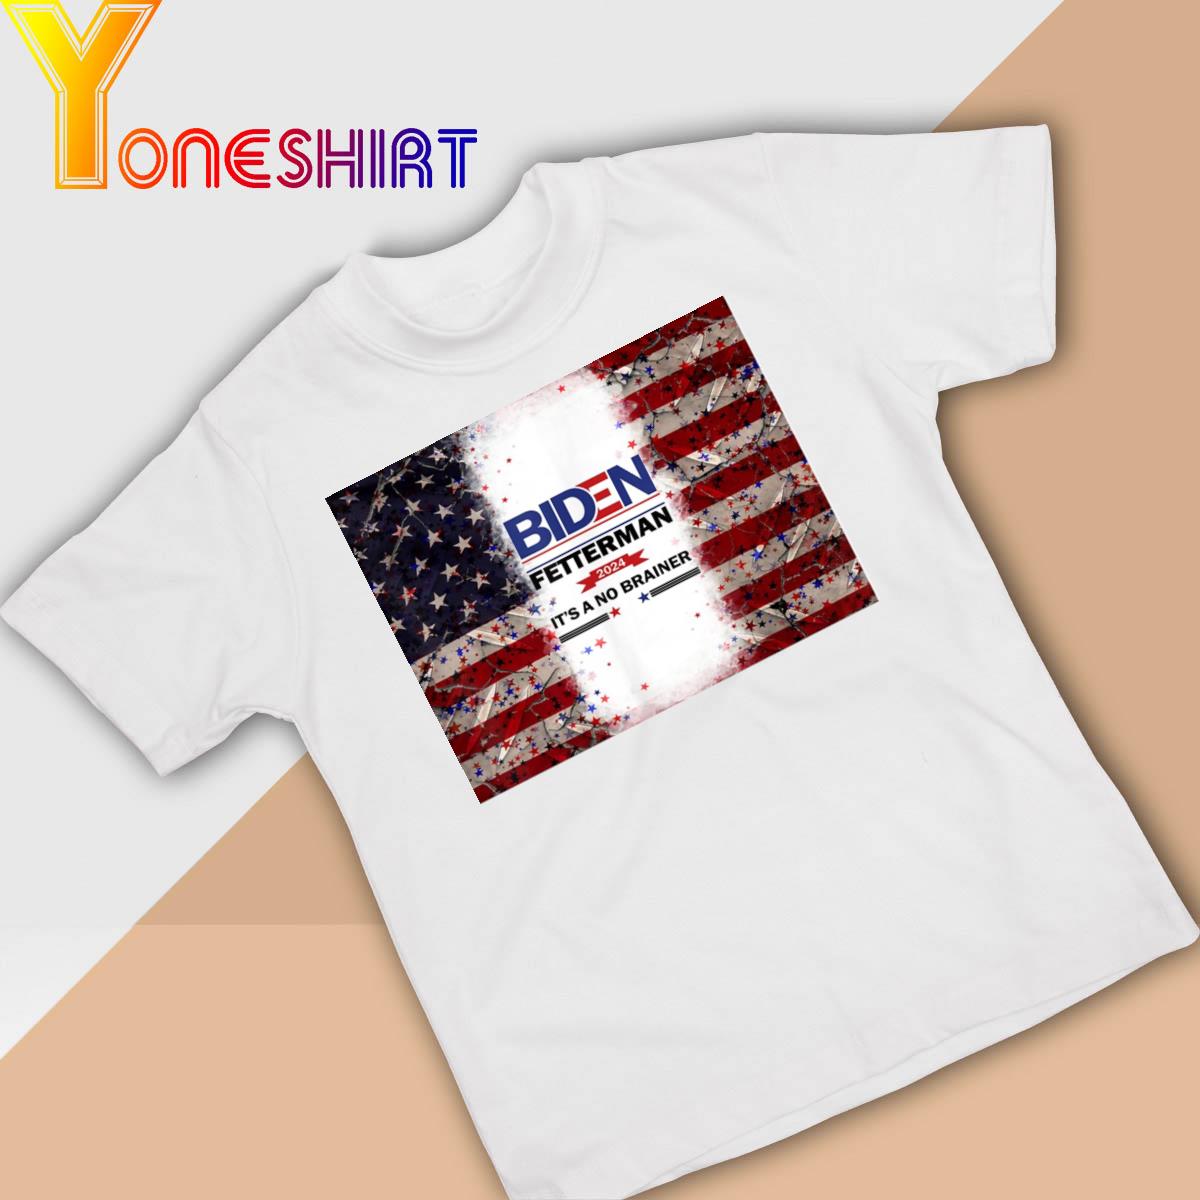 Biden Fetterman 2024 It’s a No Brainer Vintage US Flag Shirt